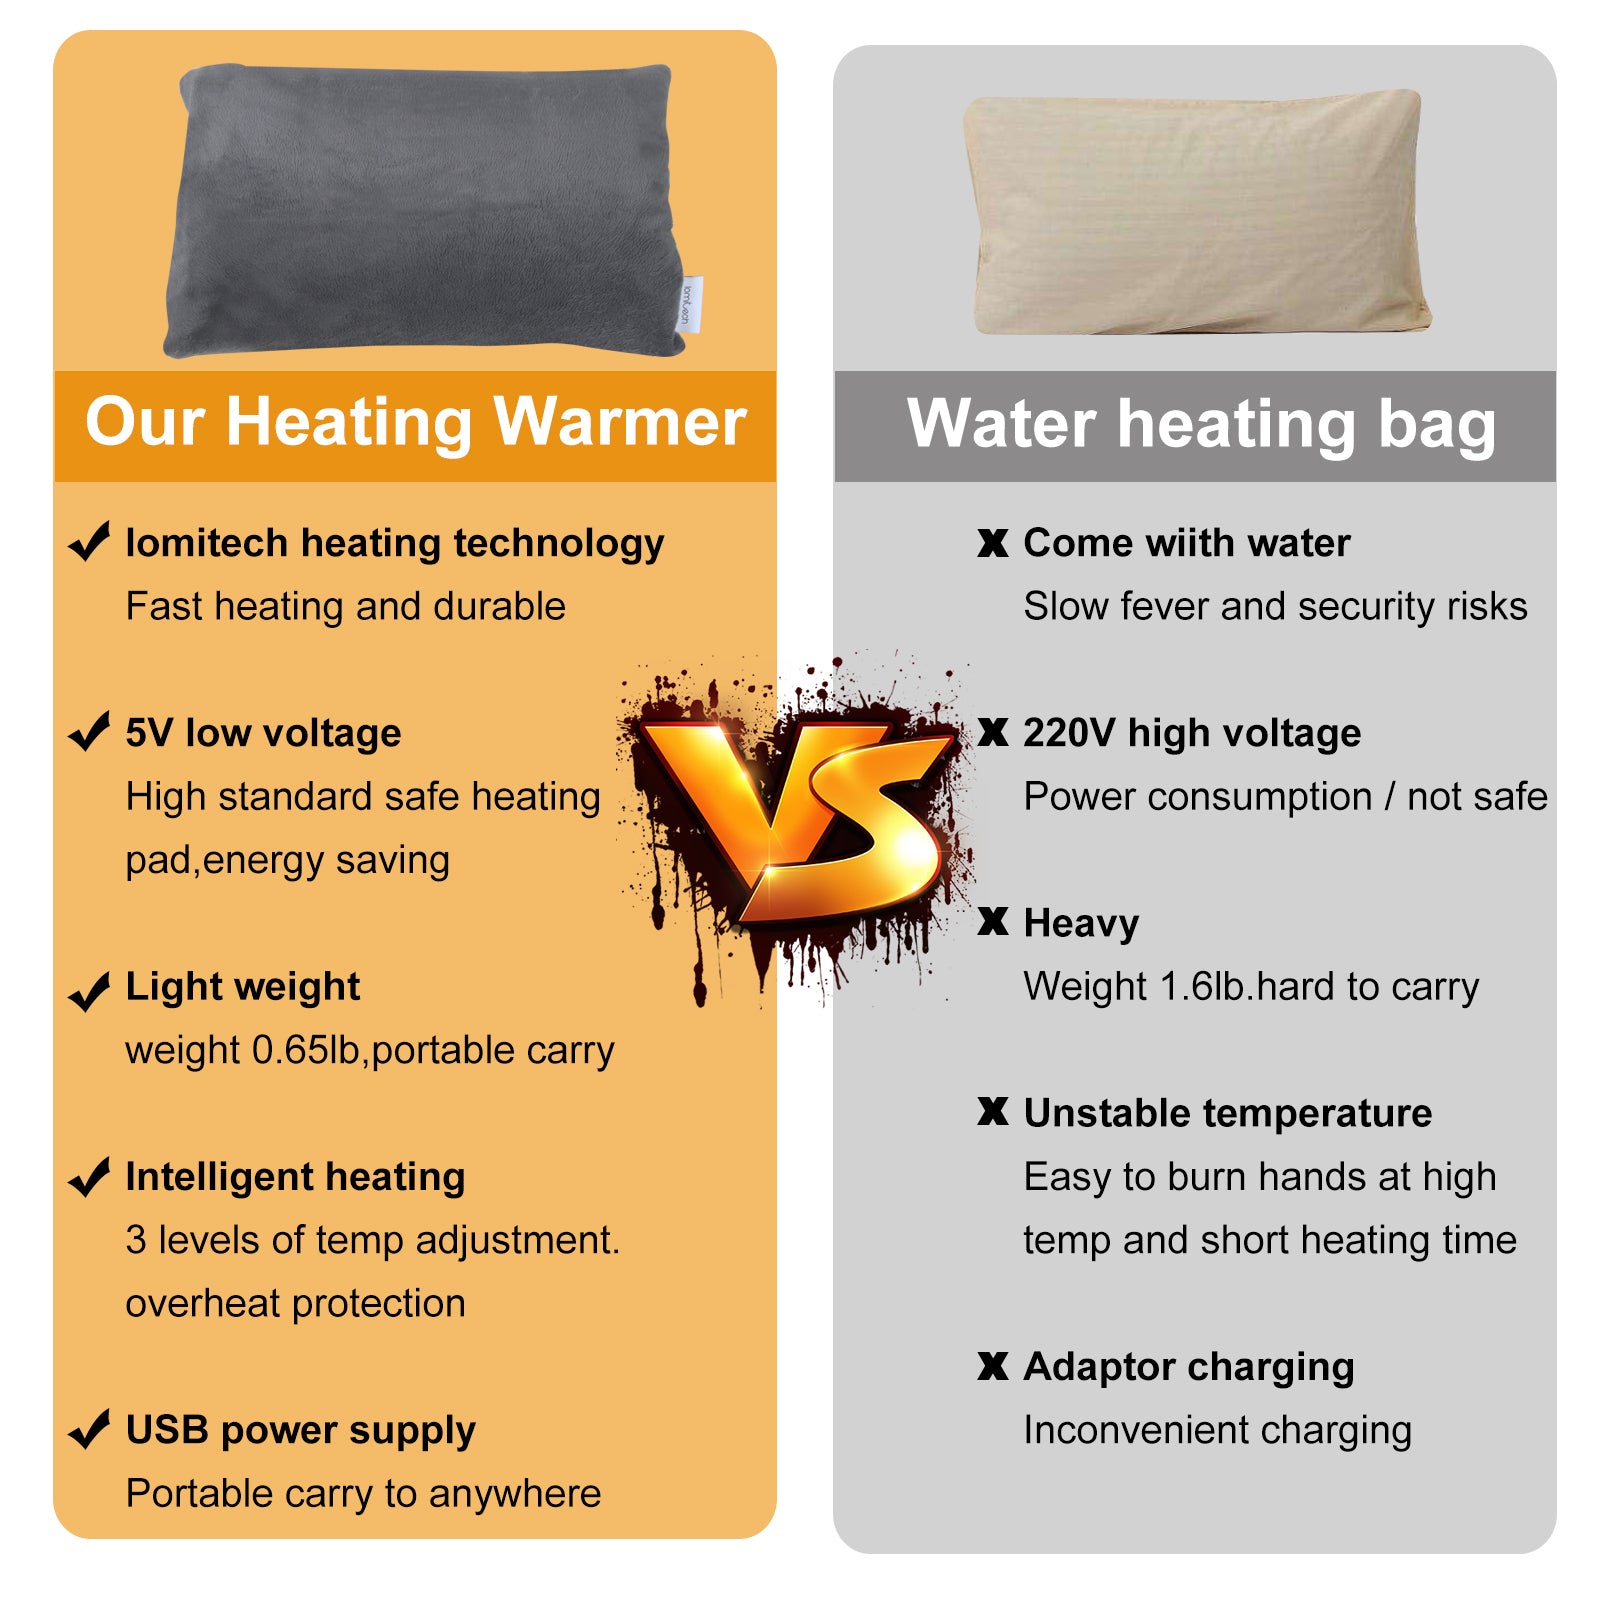 Heating Hand Warmer Benefits